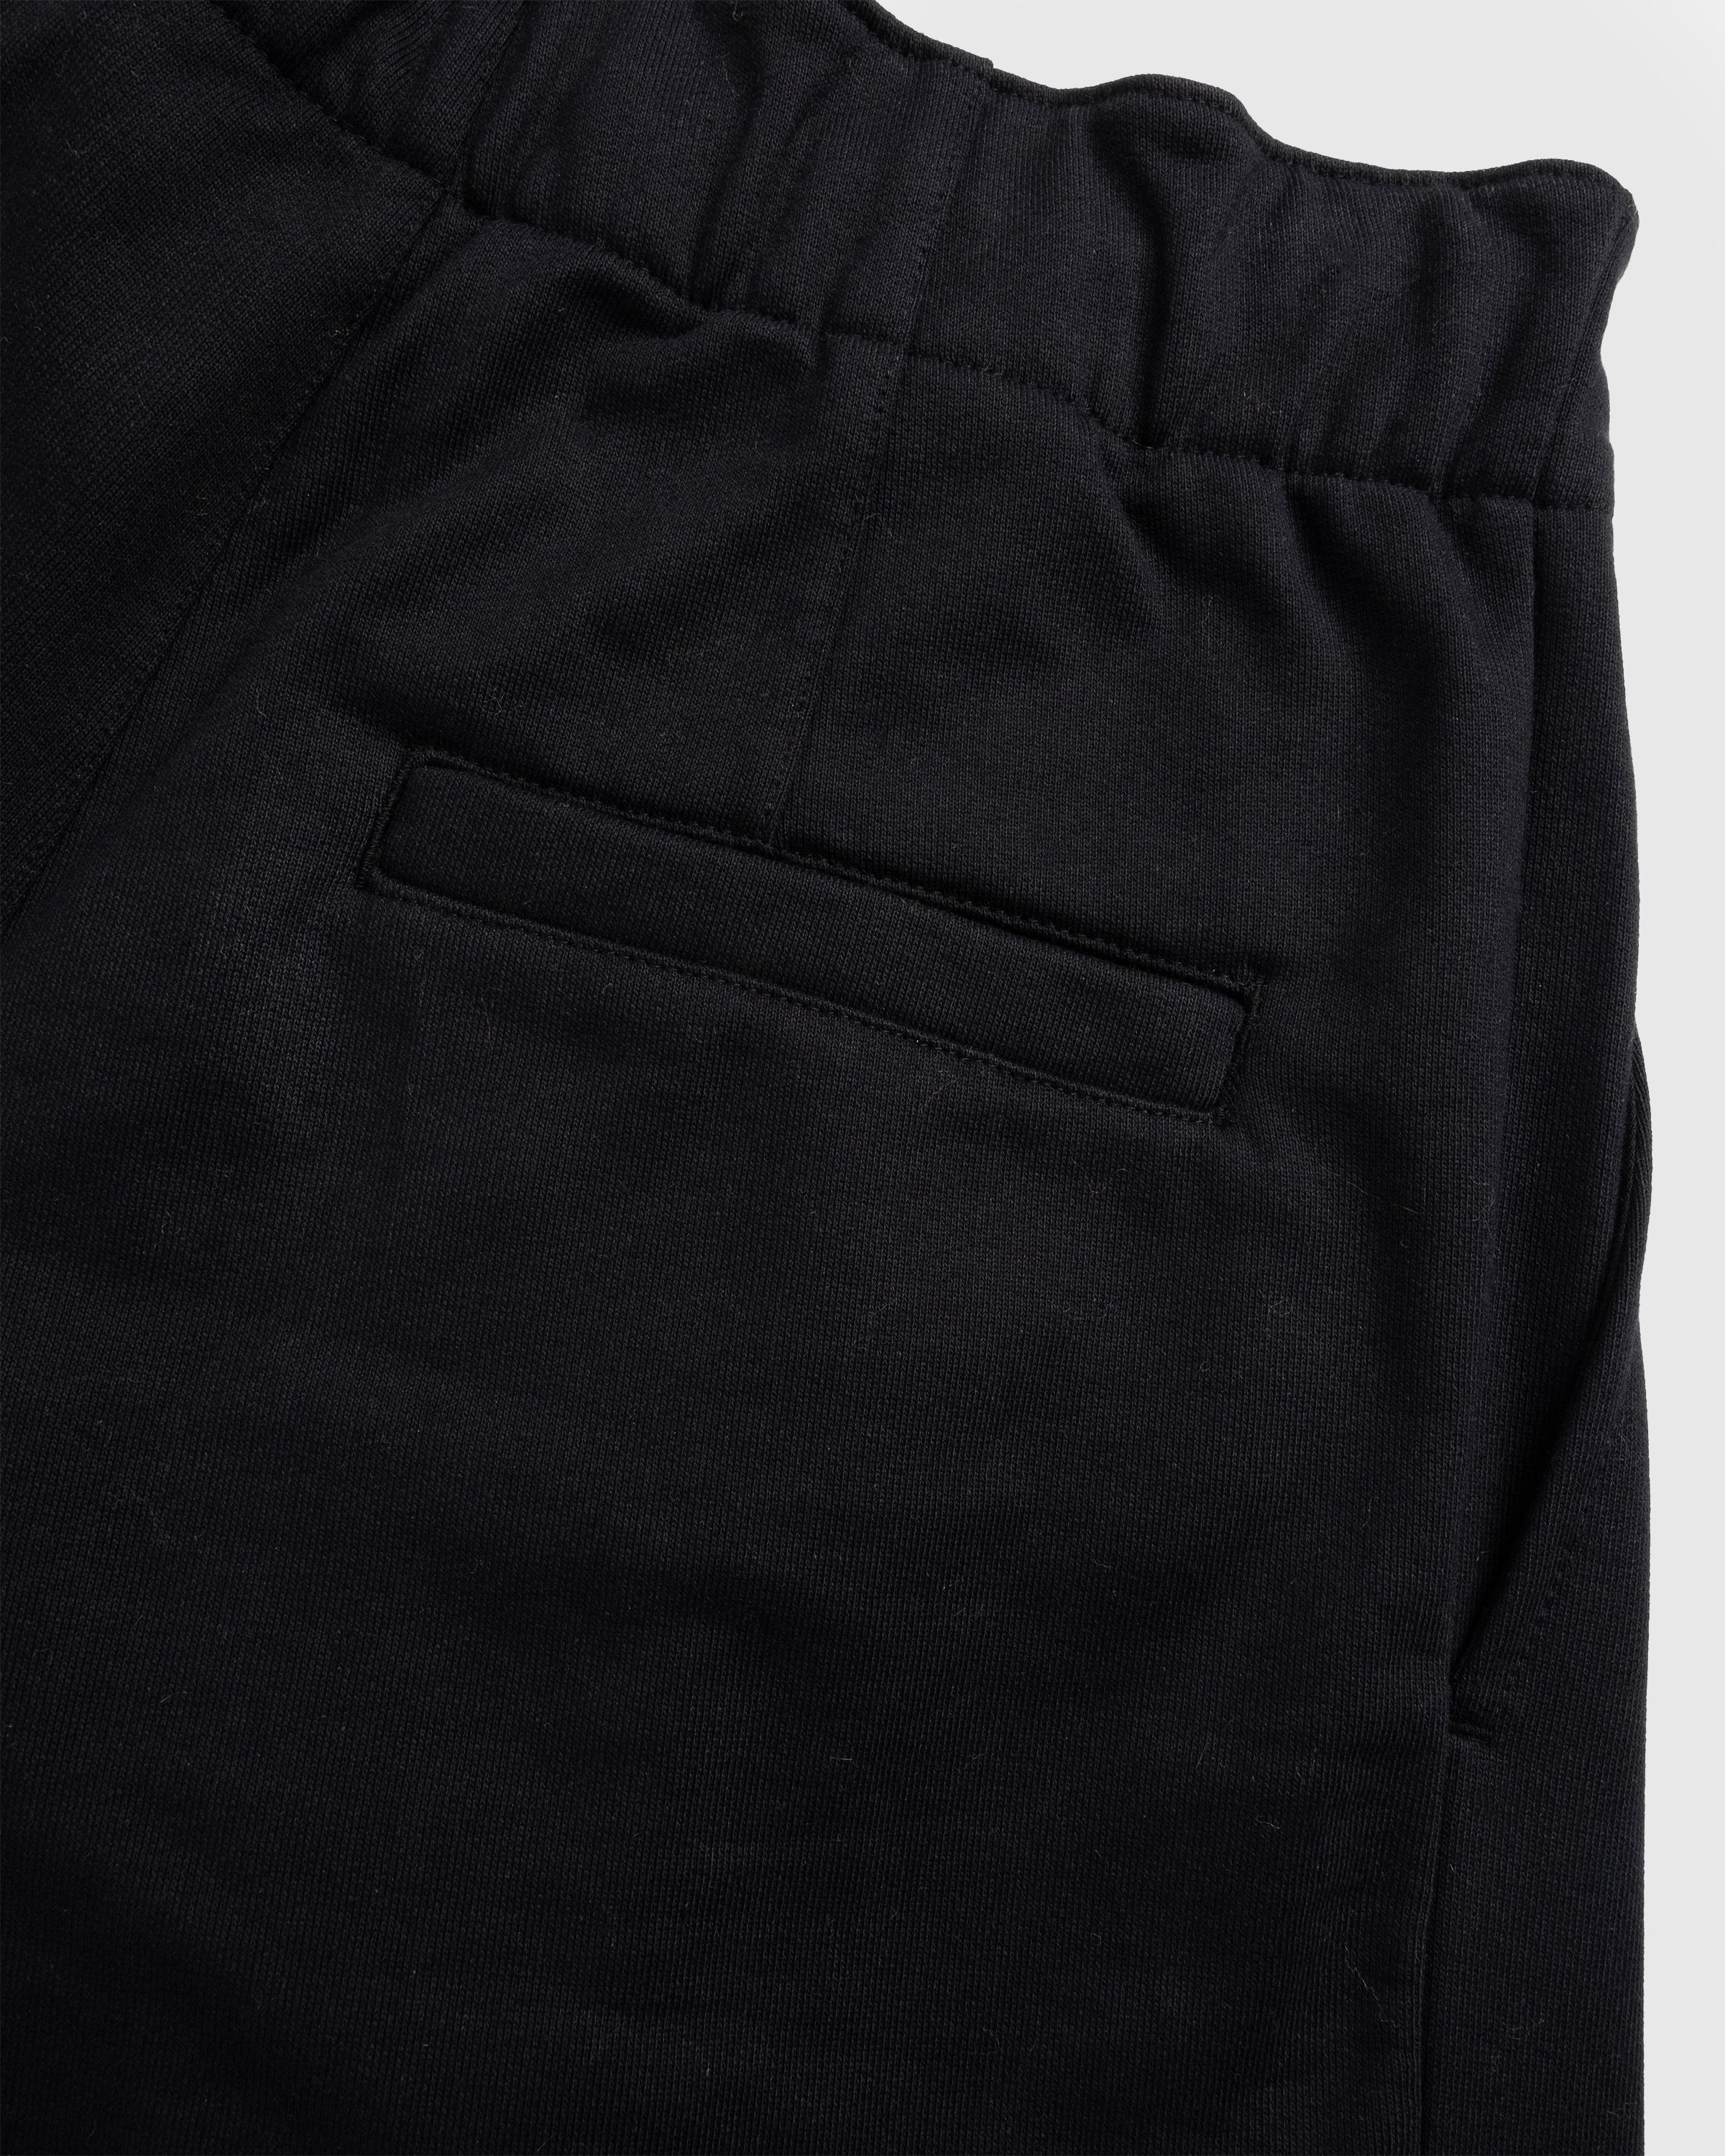 Dries van Noten - Hama Cotton Jersey Pants Black - Clothing - Black - Image 5